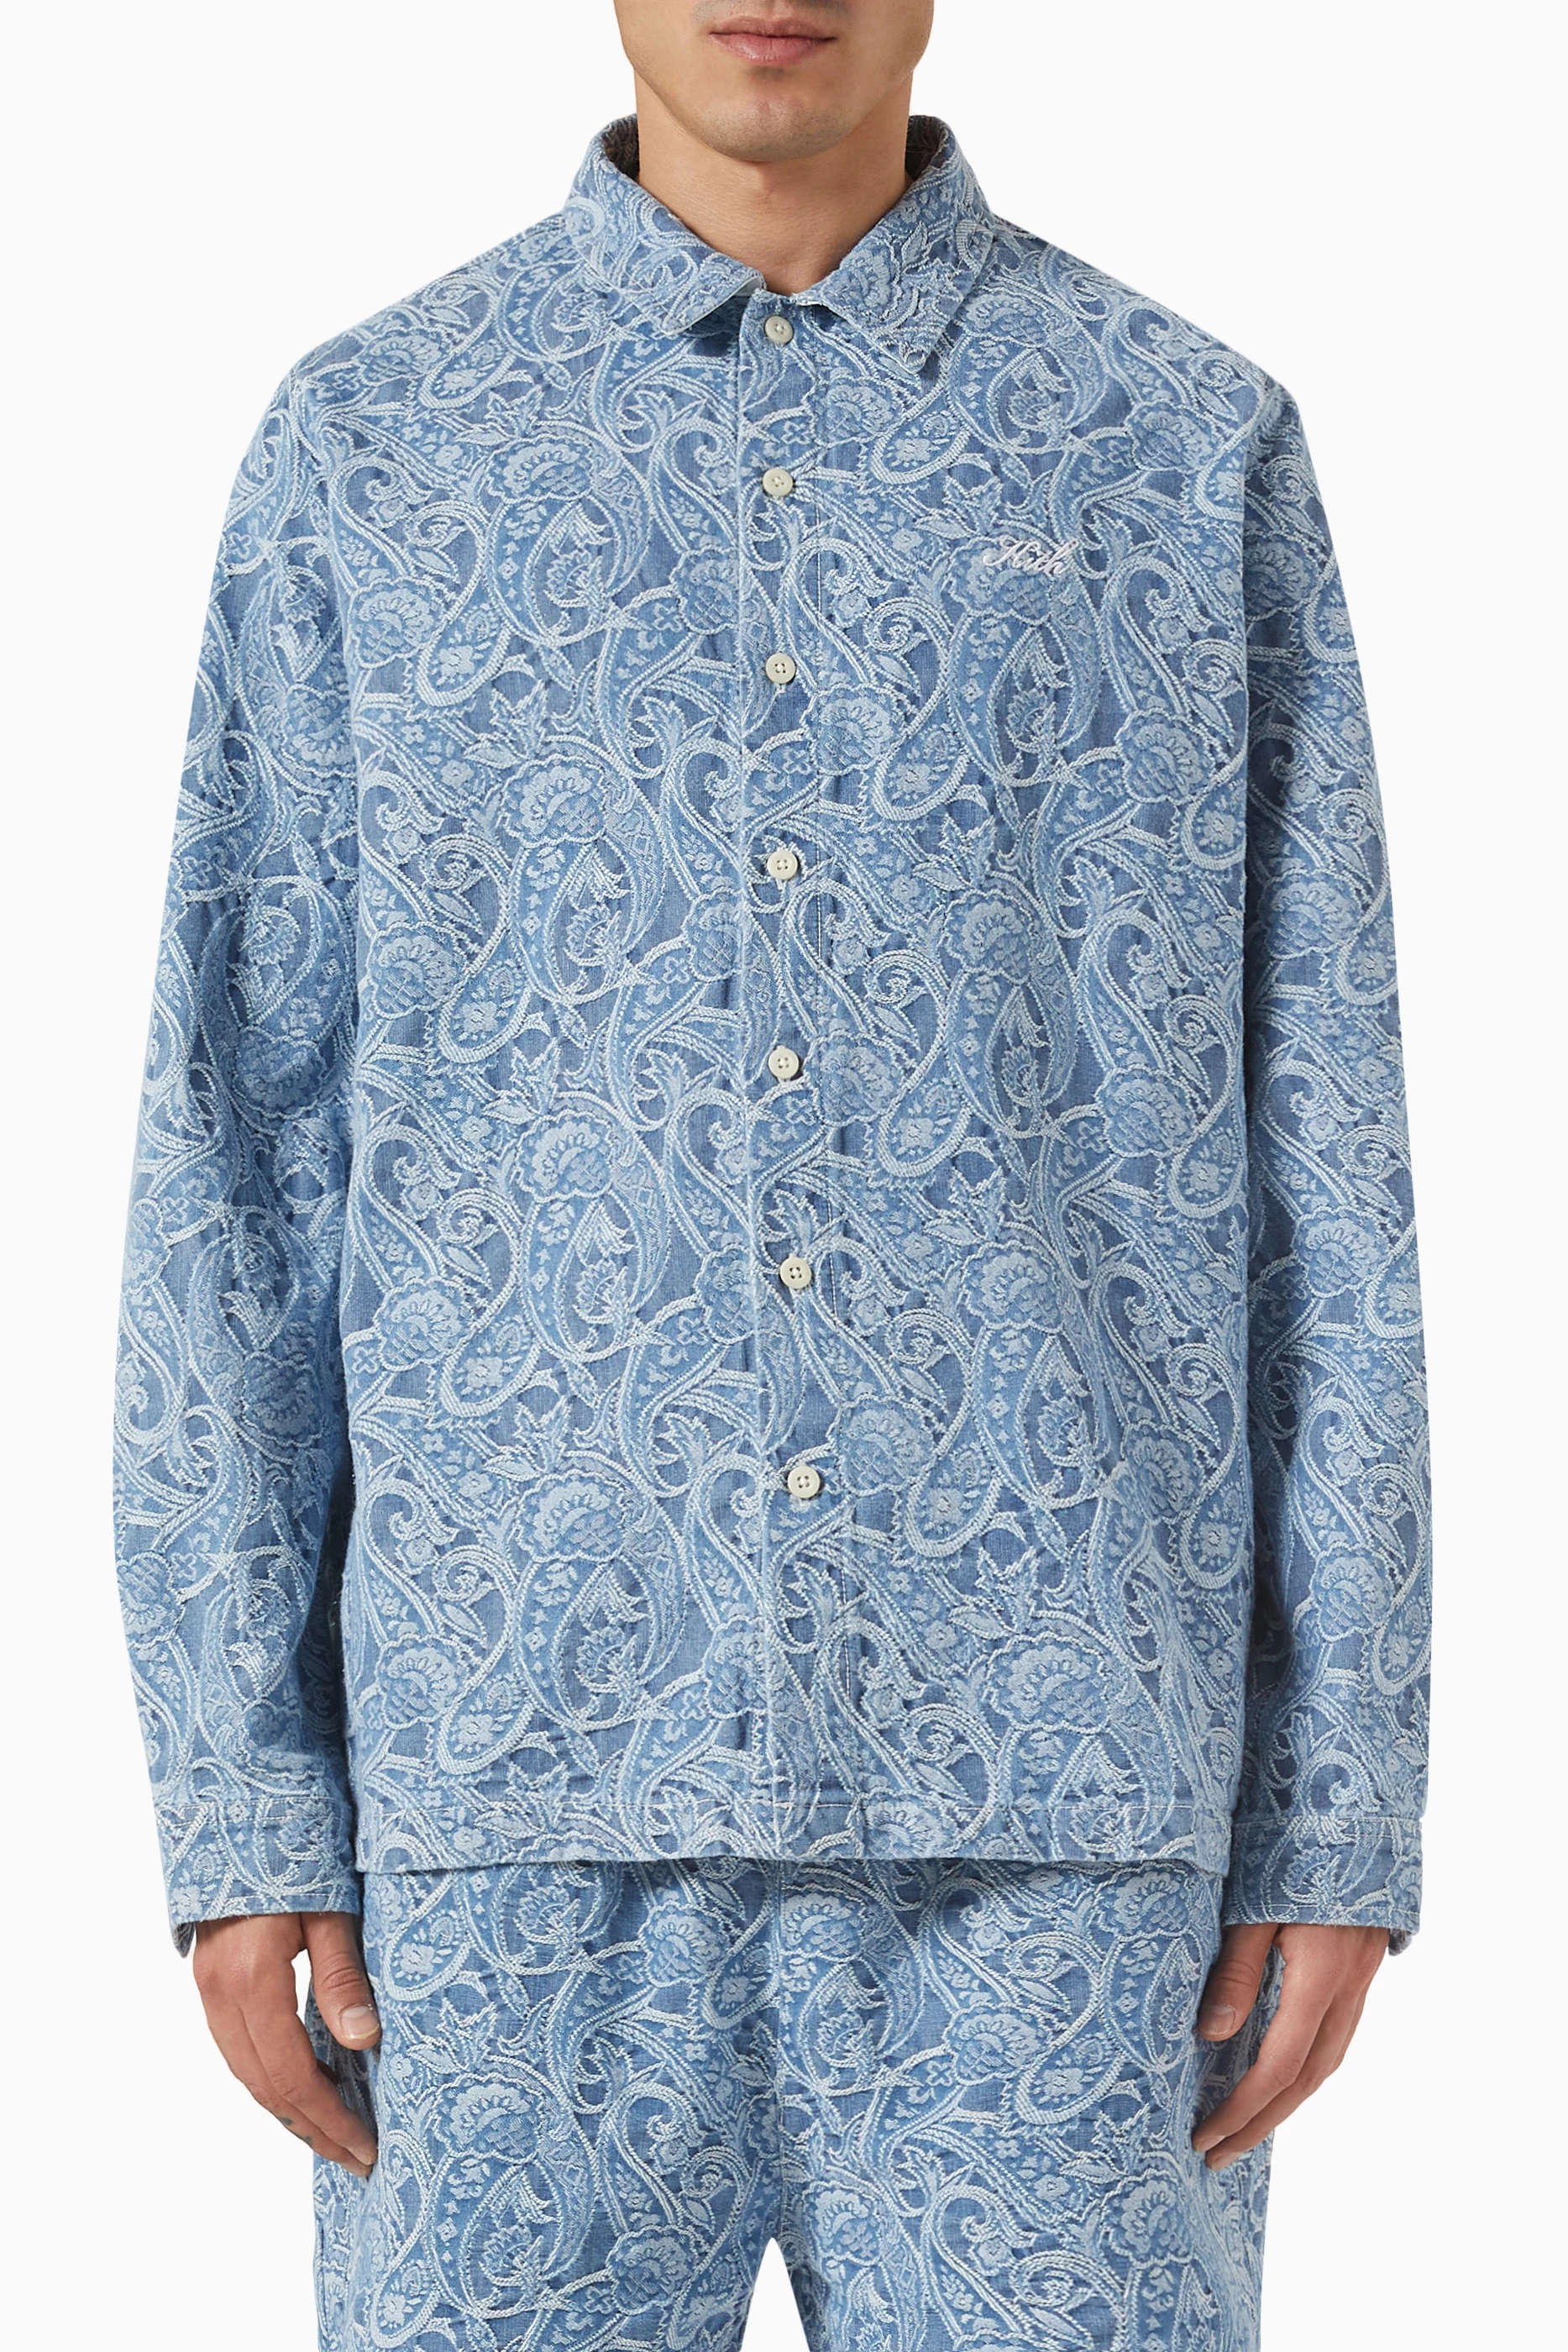 Shop Kith Blue Japanese Paisley Shirt in Denim for MEN | Ounass Saudi Arabia